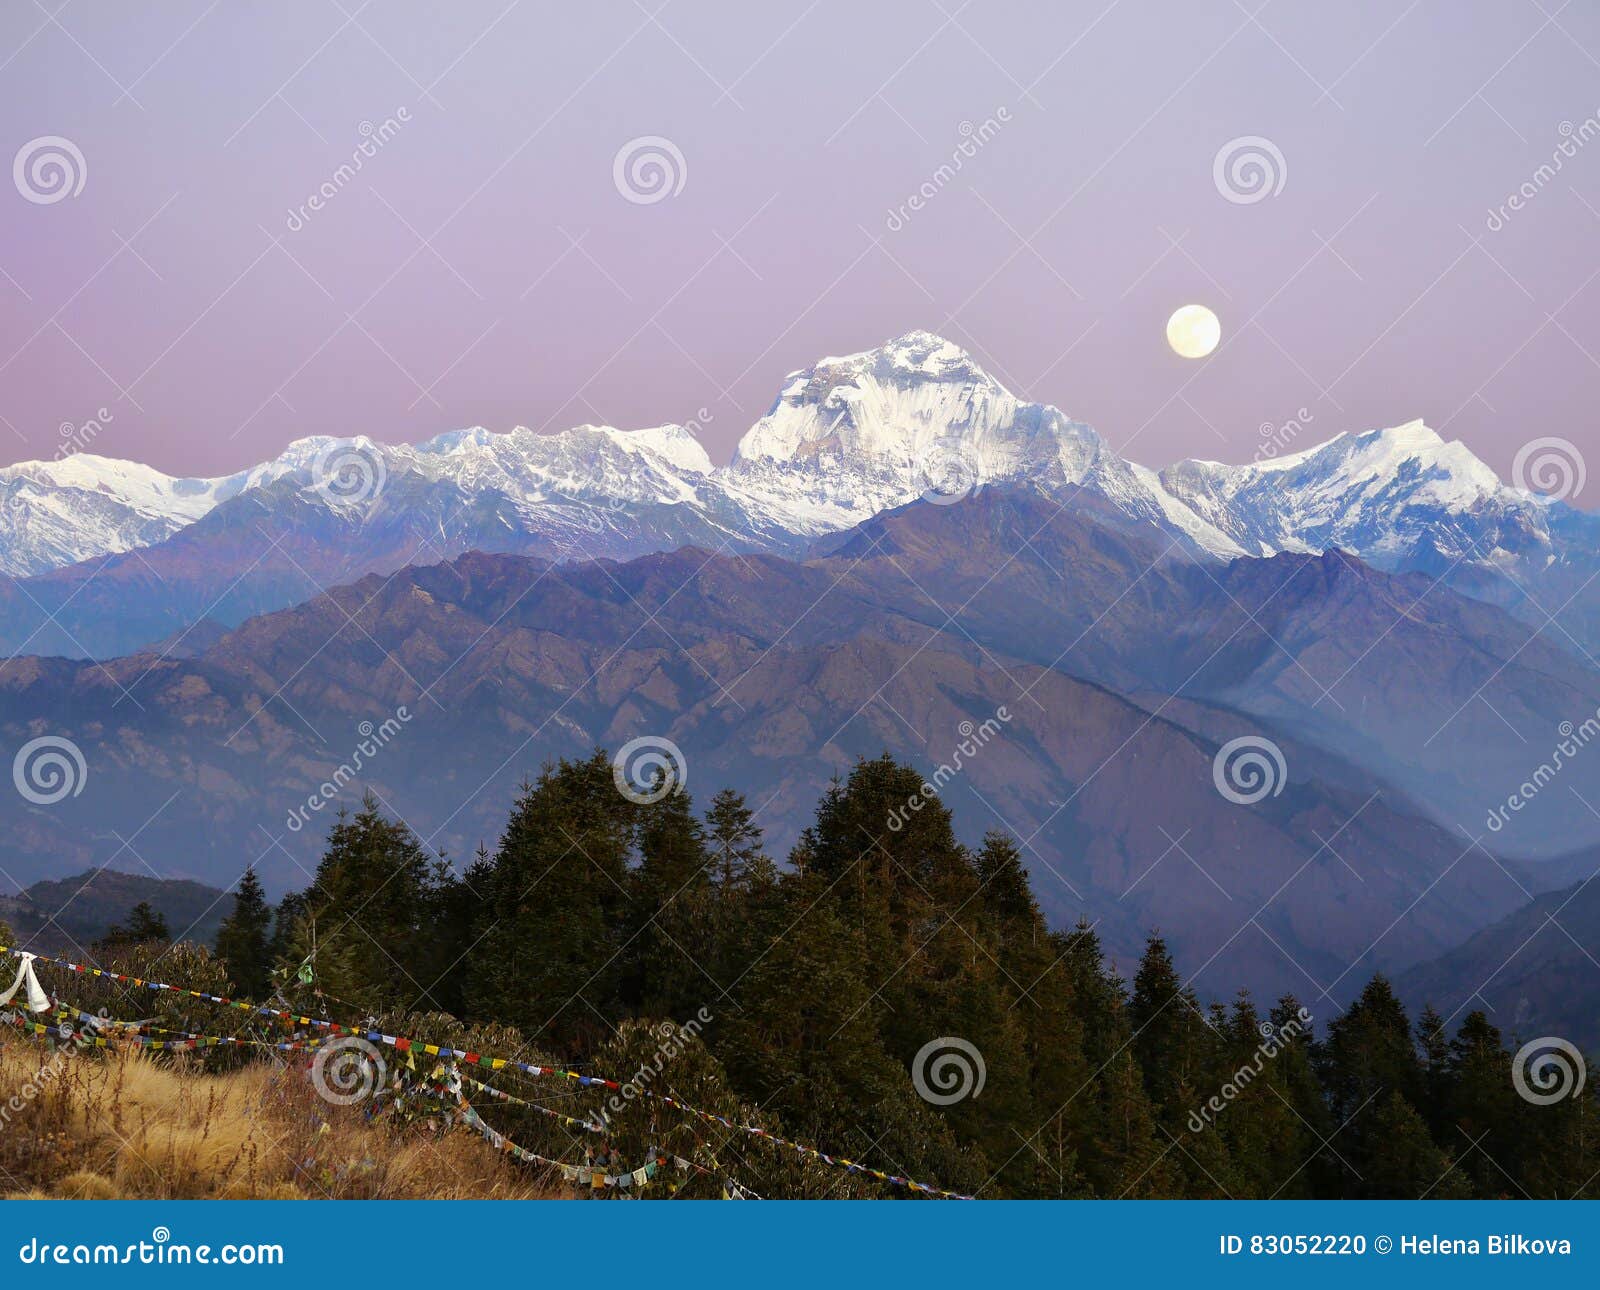 moonrise dhaulagiri-annapurna himalayas mountains